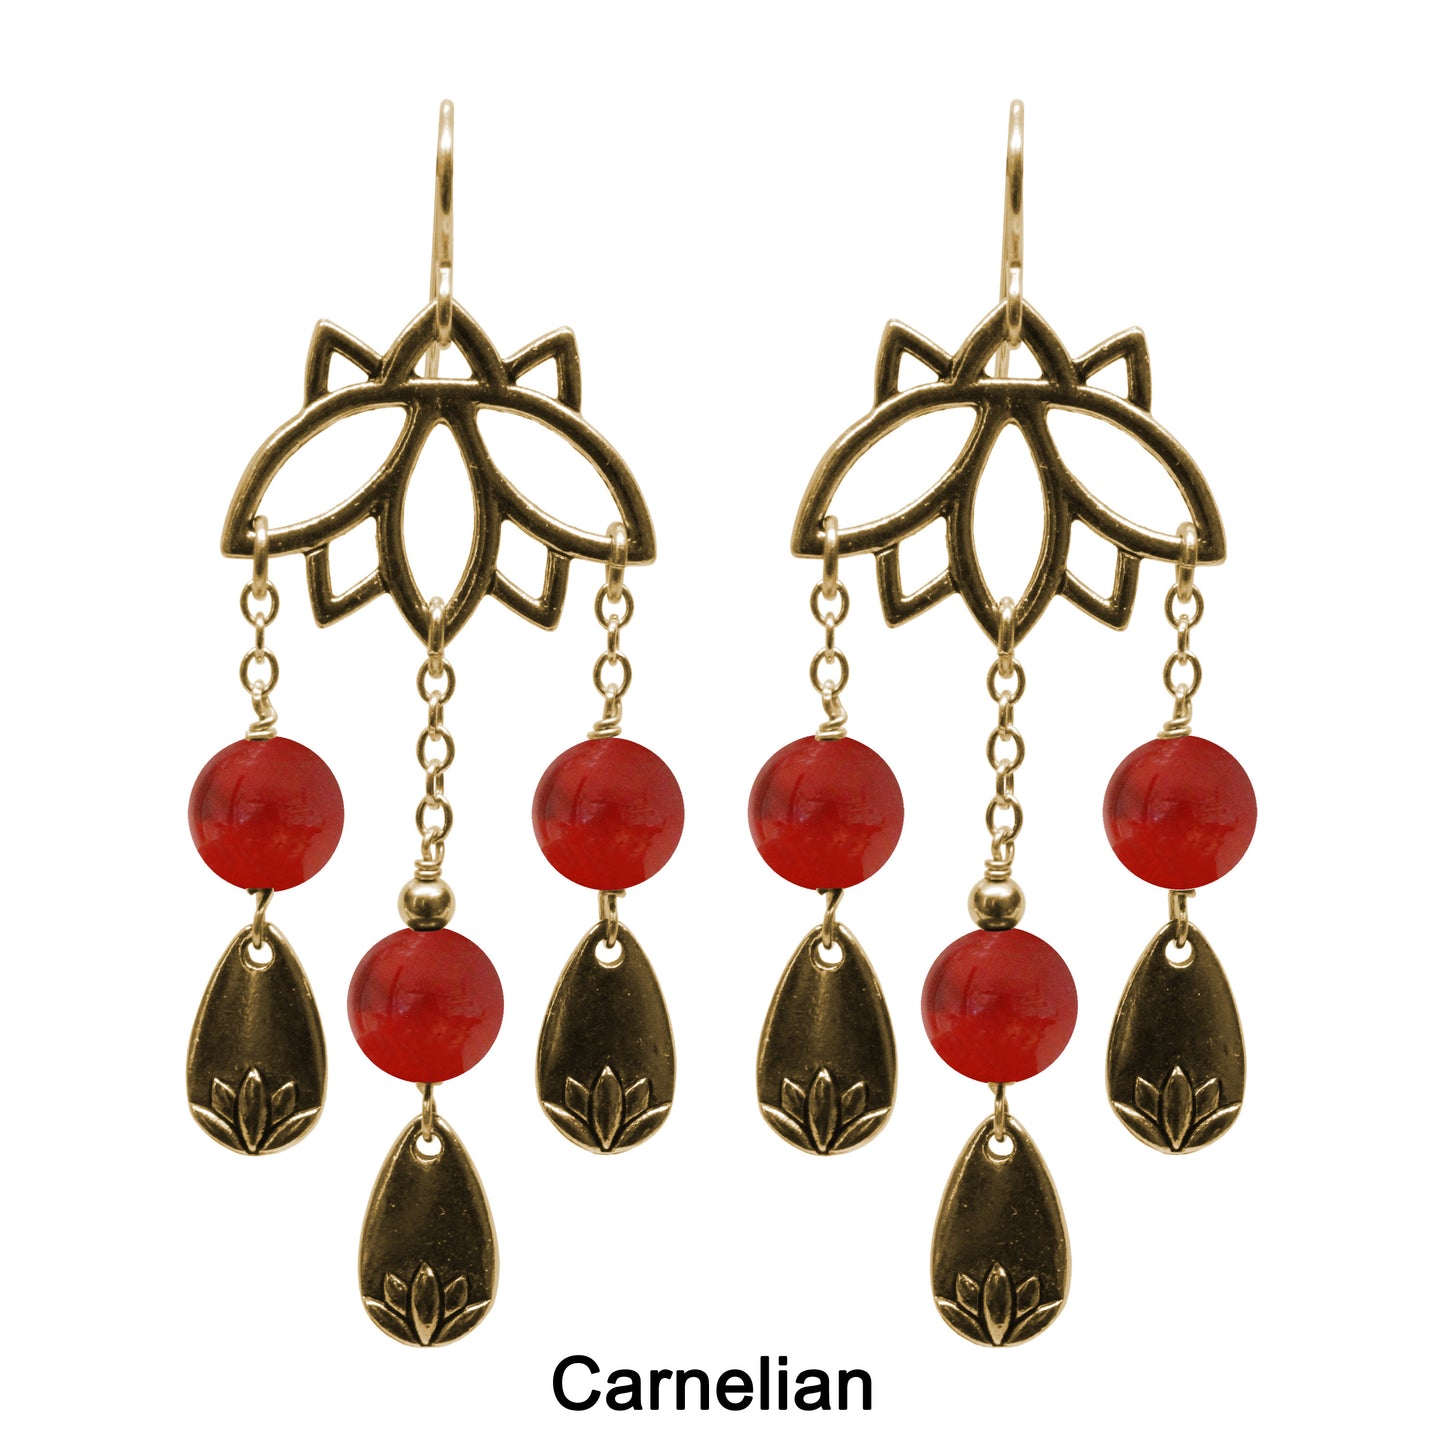 Lotus Earrings / 67mm length / gold filled earwires / choose from angelite, apatite, carnelian, garnet, malachite or pink opal